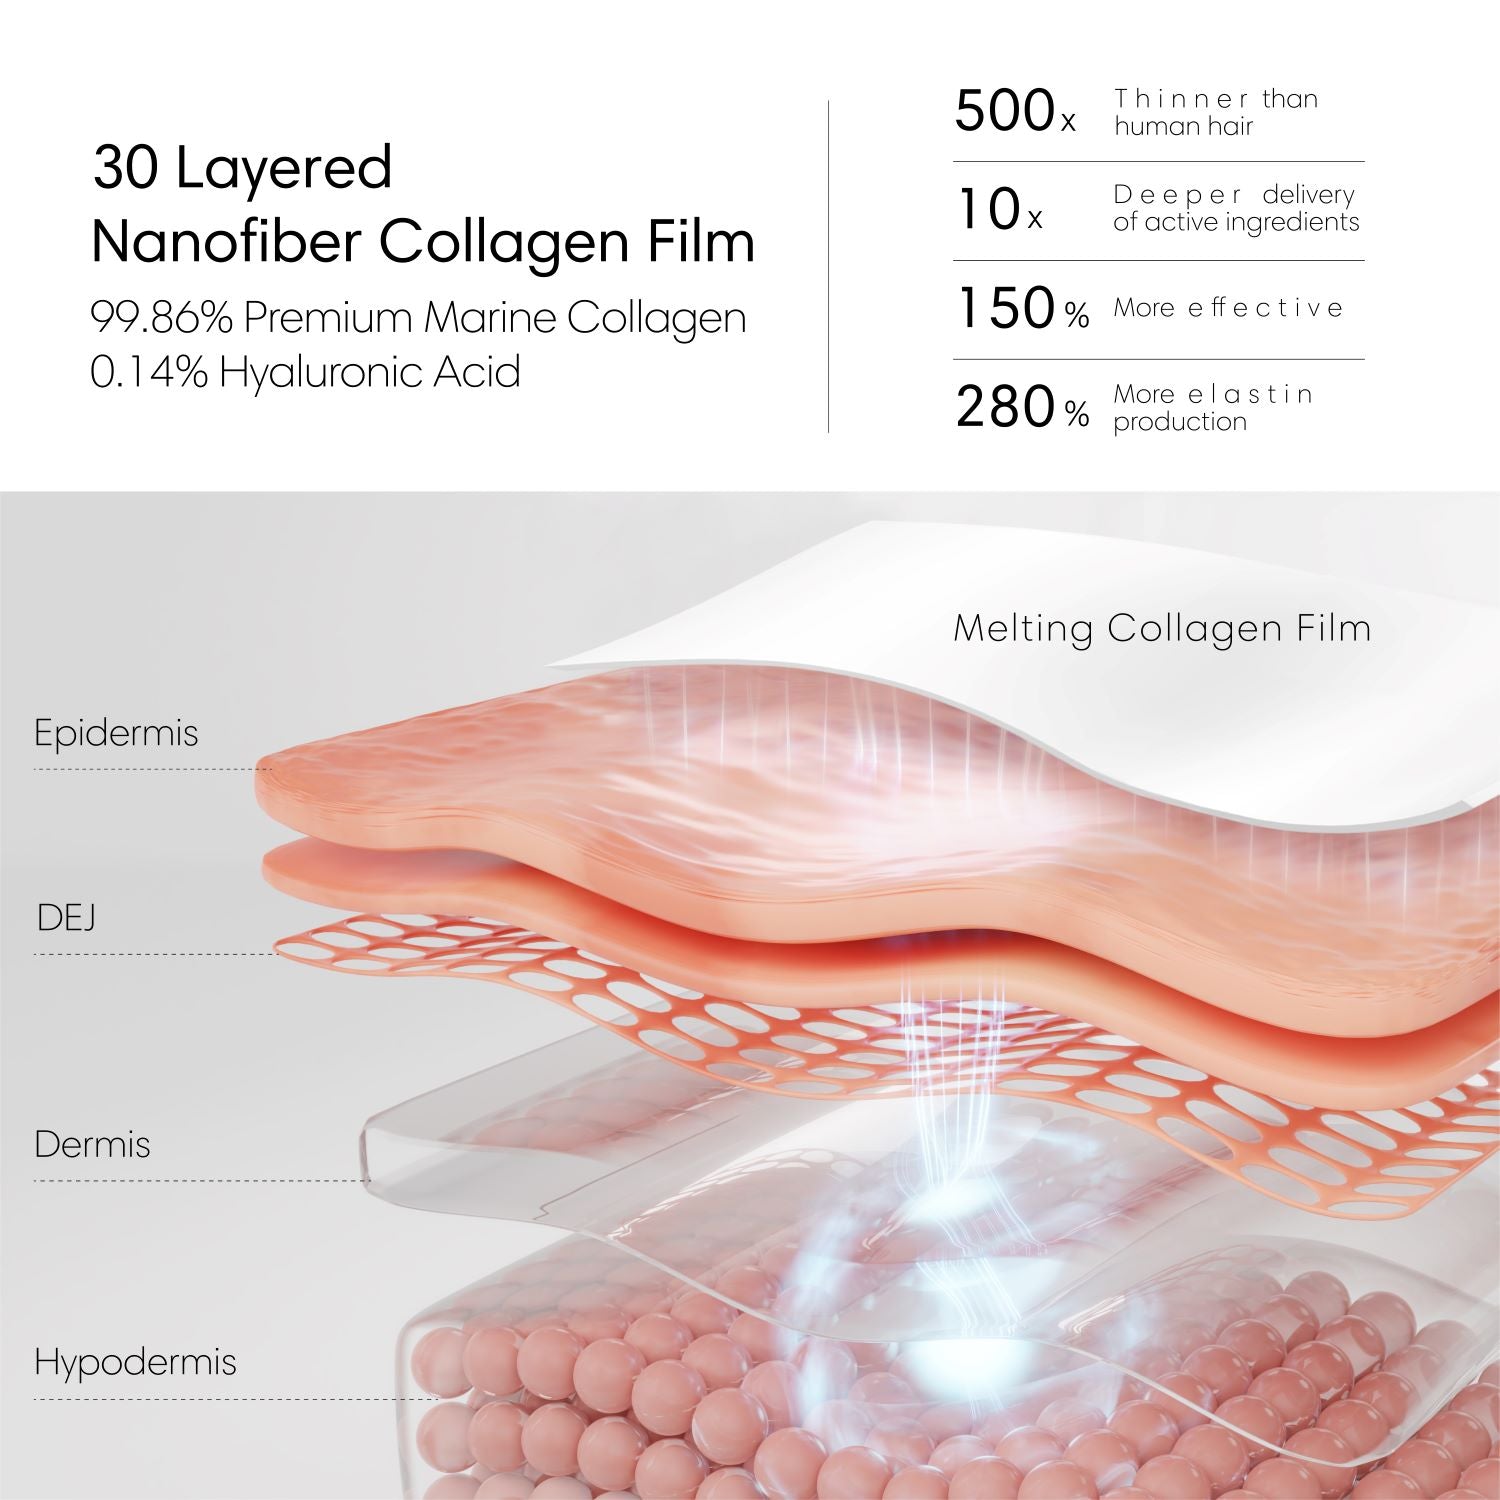 Nanofiber Collagen Film